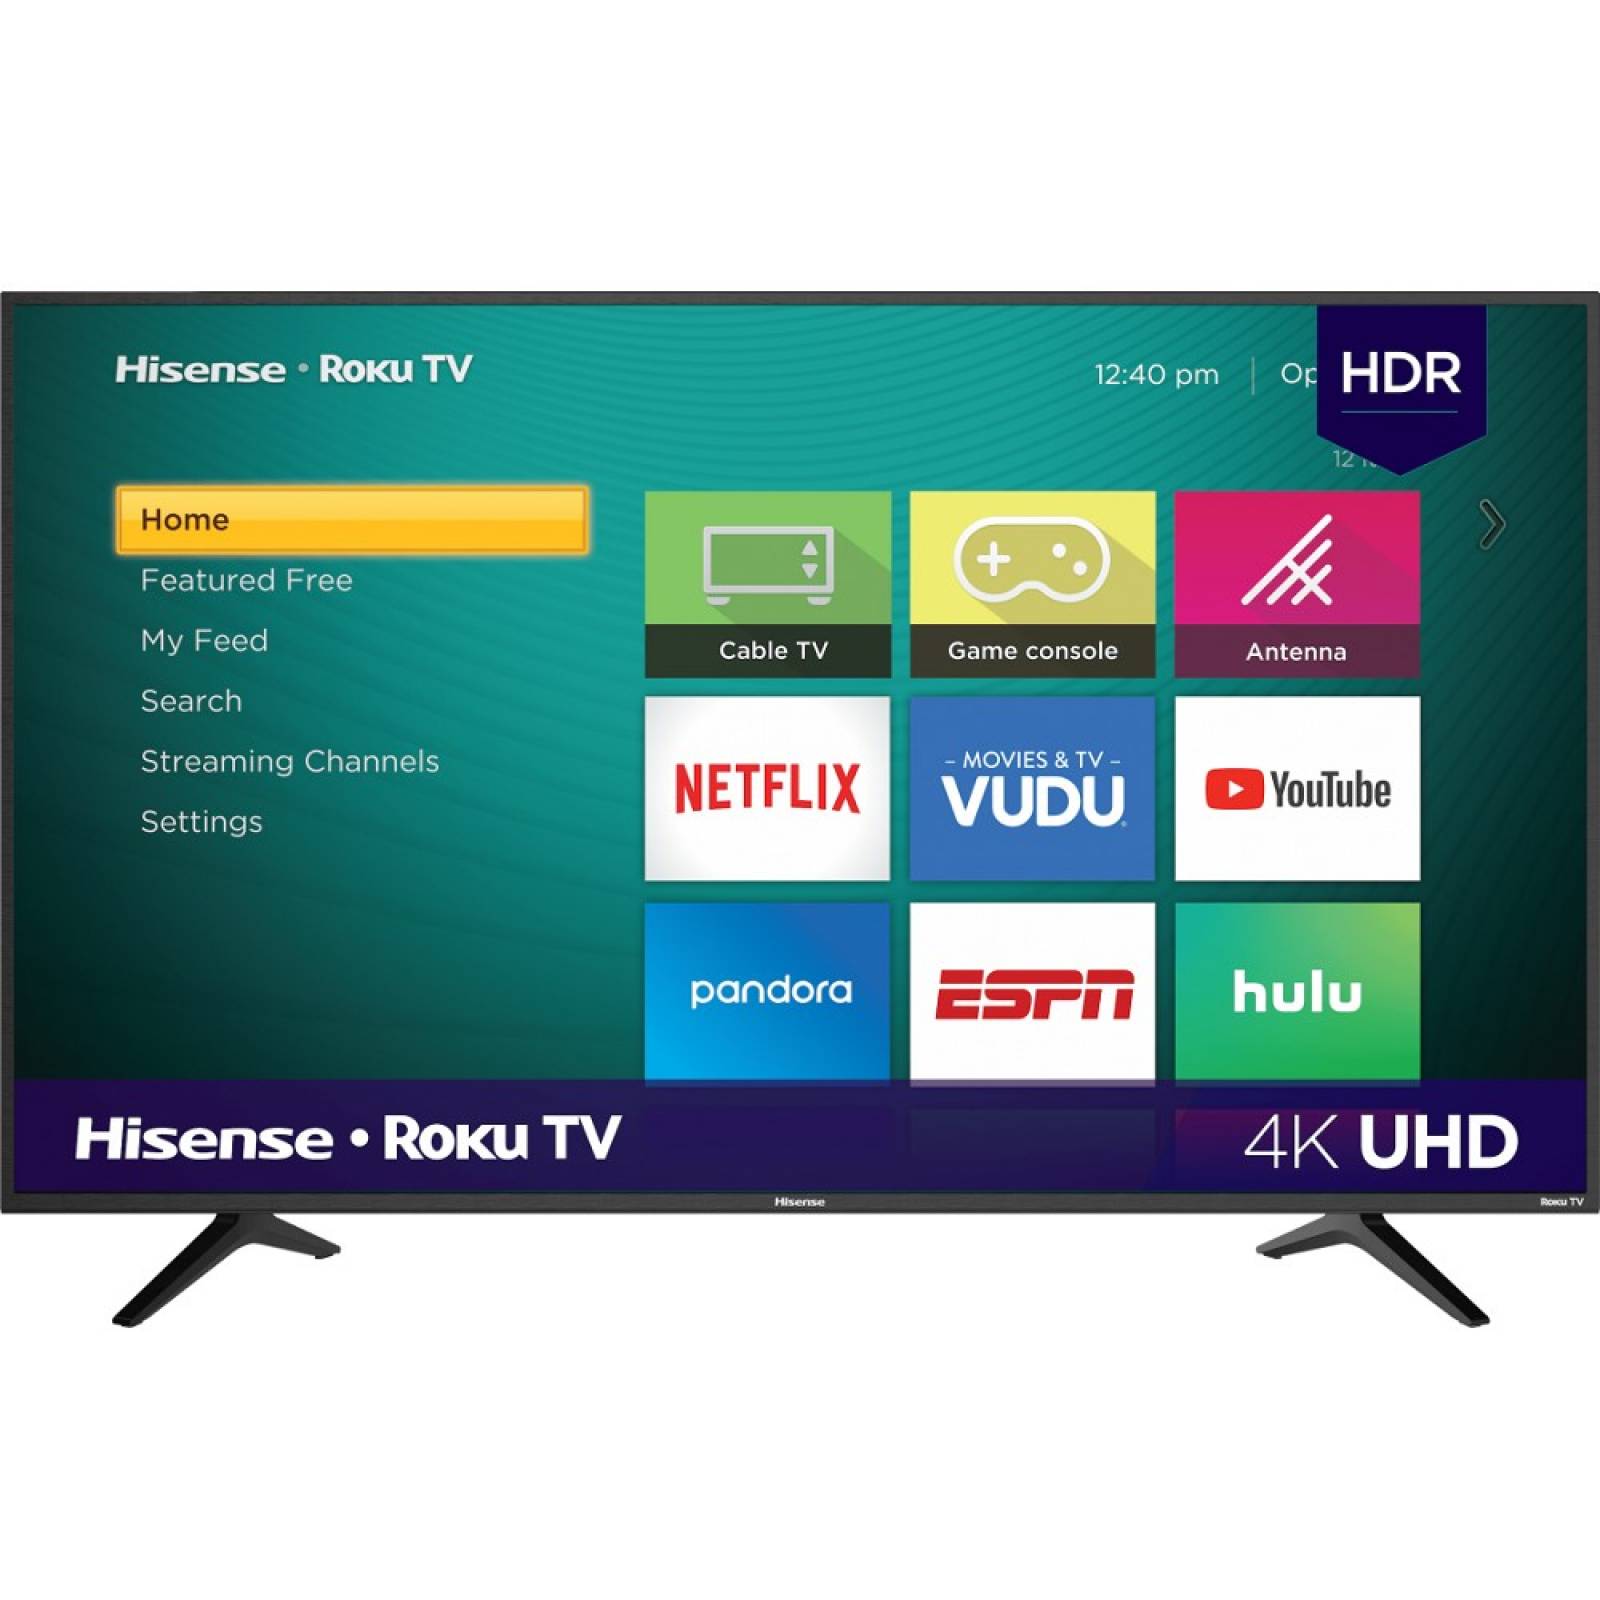 Smart TV 58 Hisense LED Roku TV HDMI 4K upscaler 58R6E - Reacondicionado